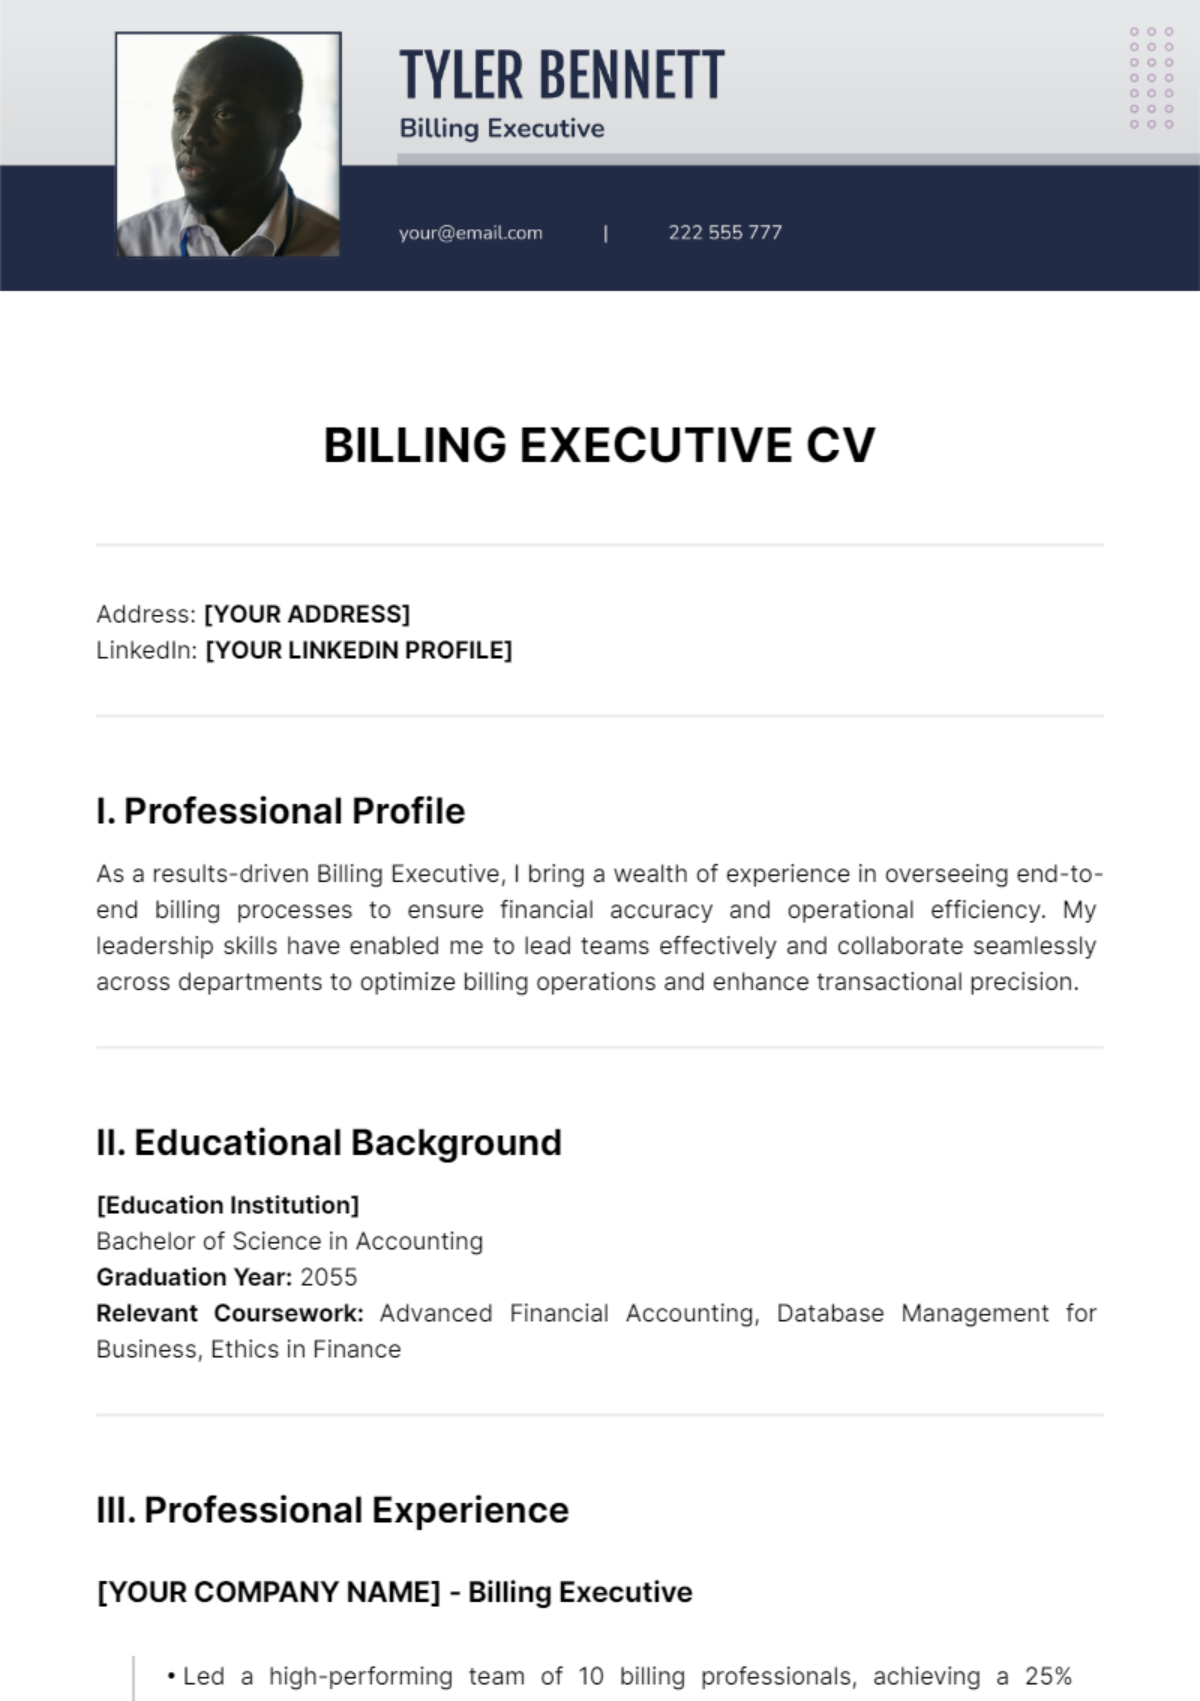 Billing Executive CV Template